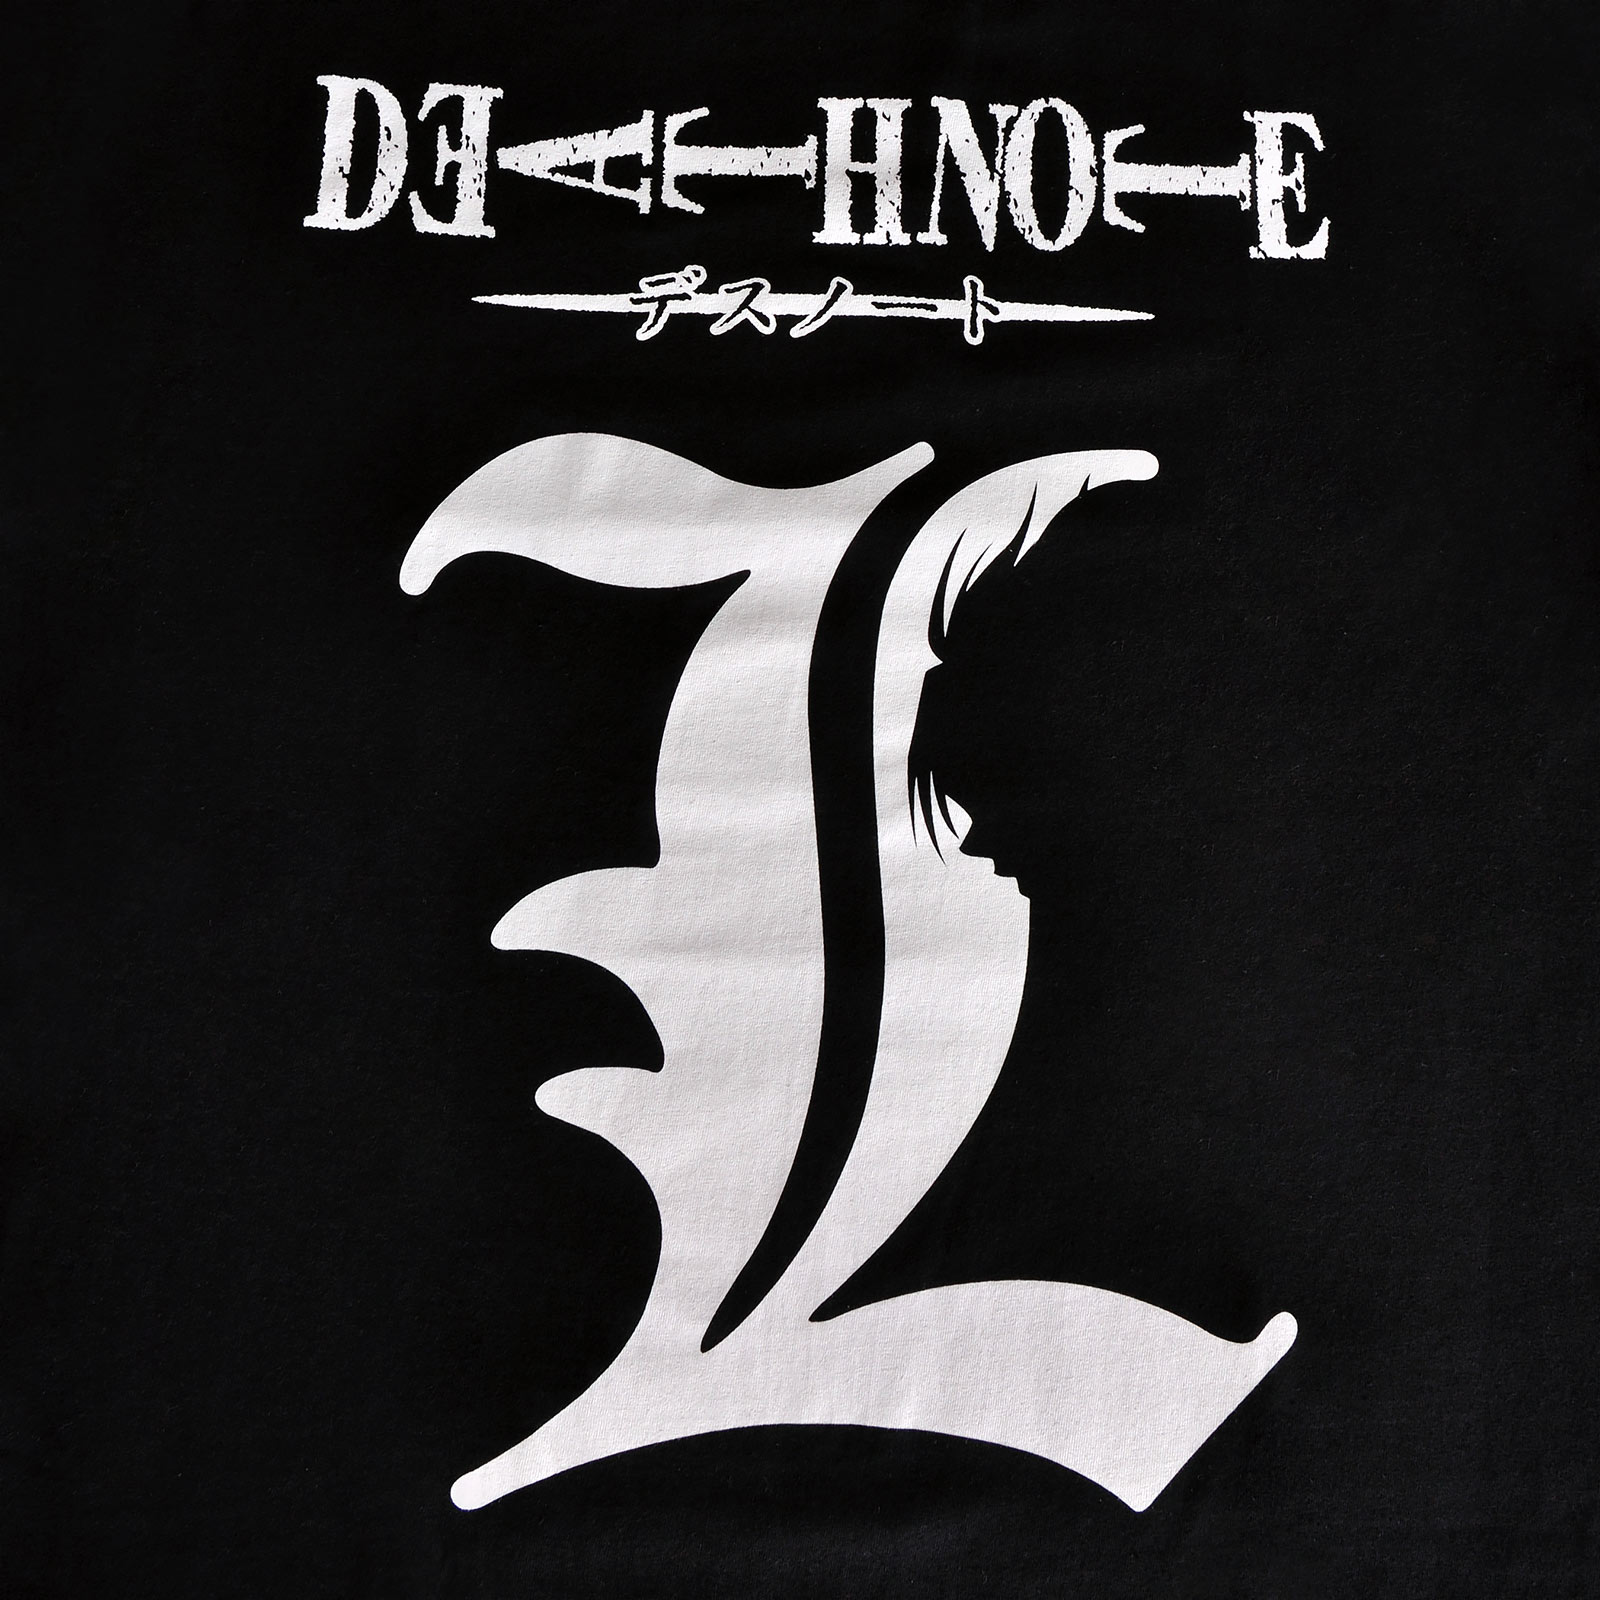 Death Note - L Silhouette T-Shirt schwarz